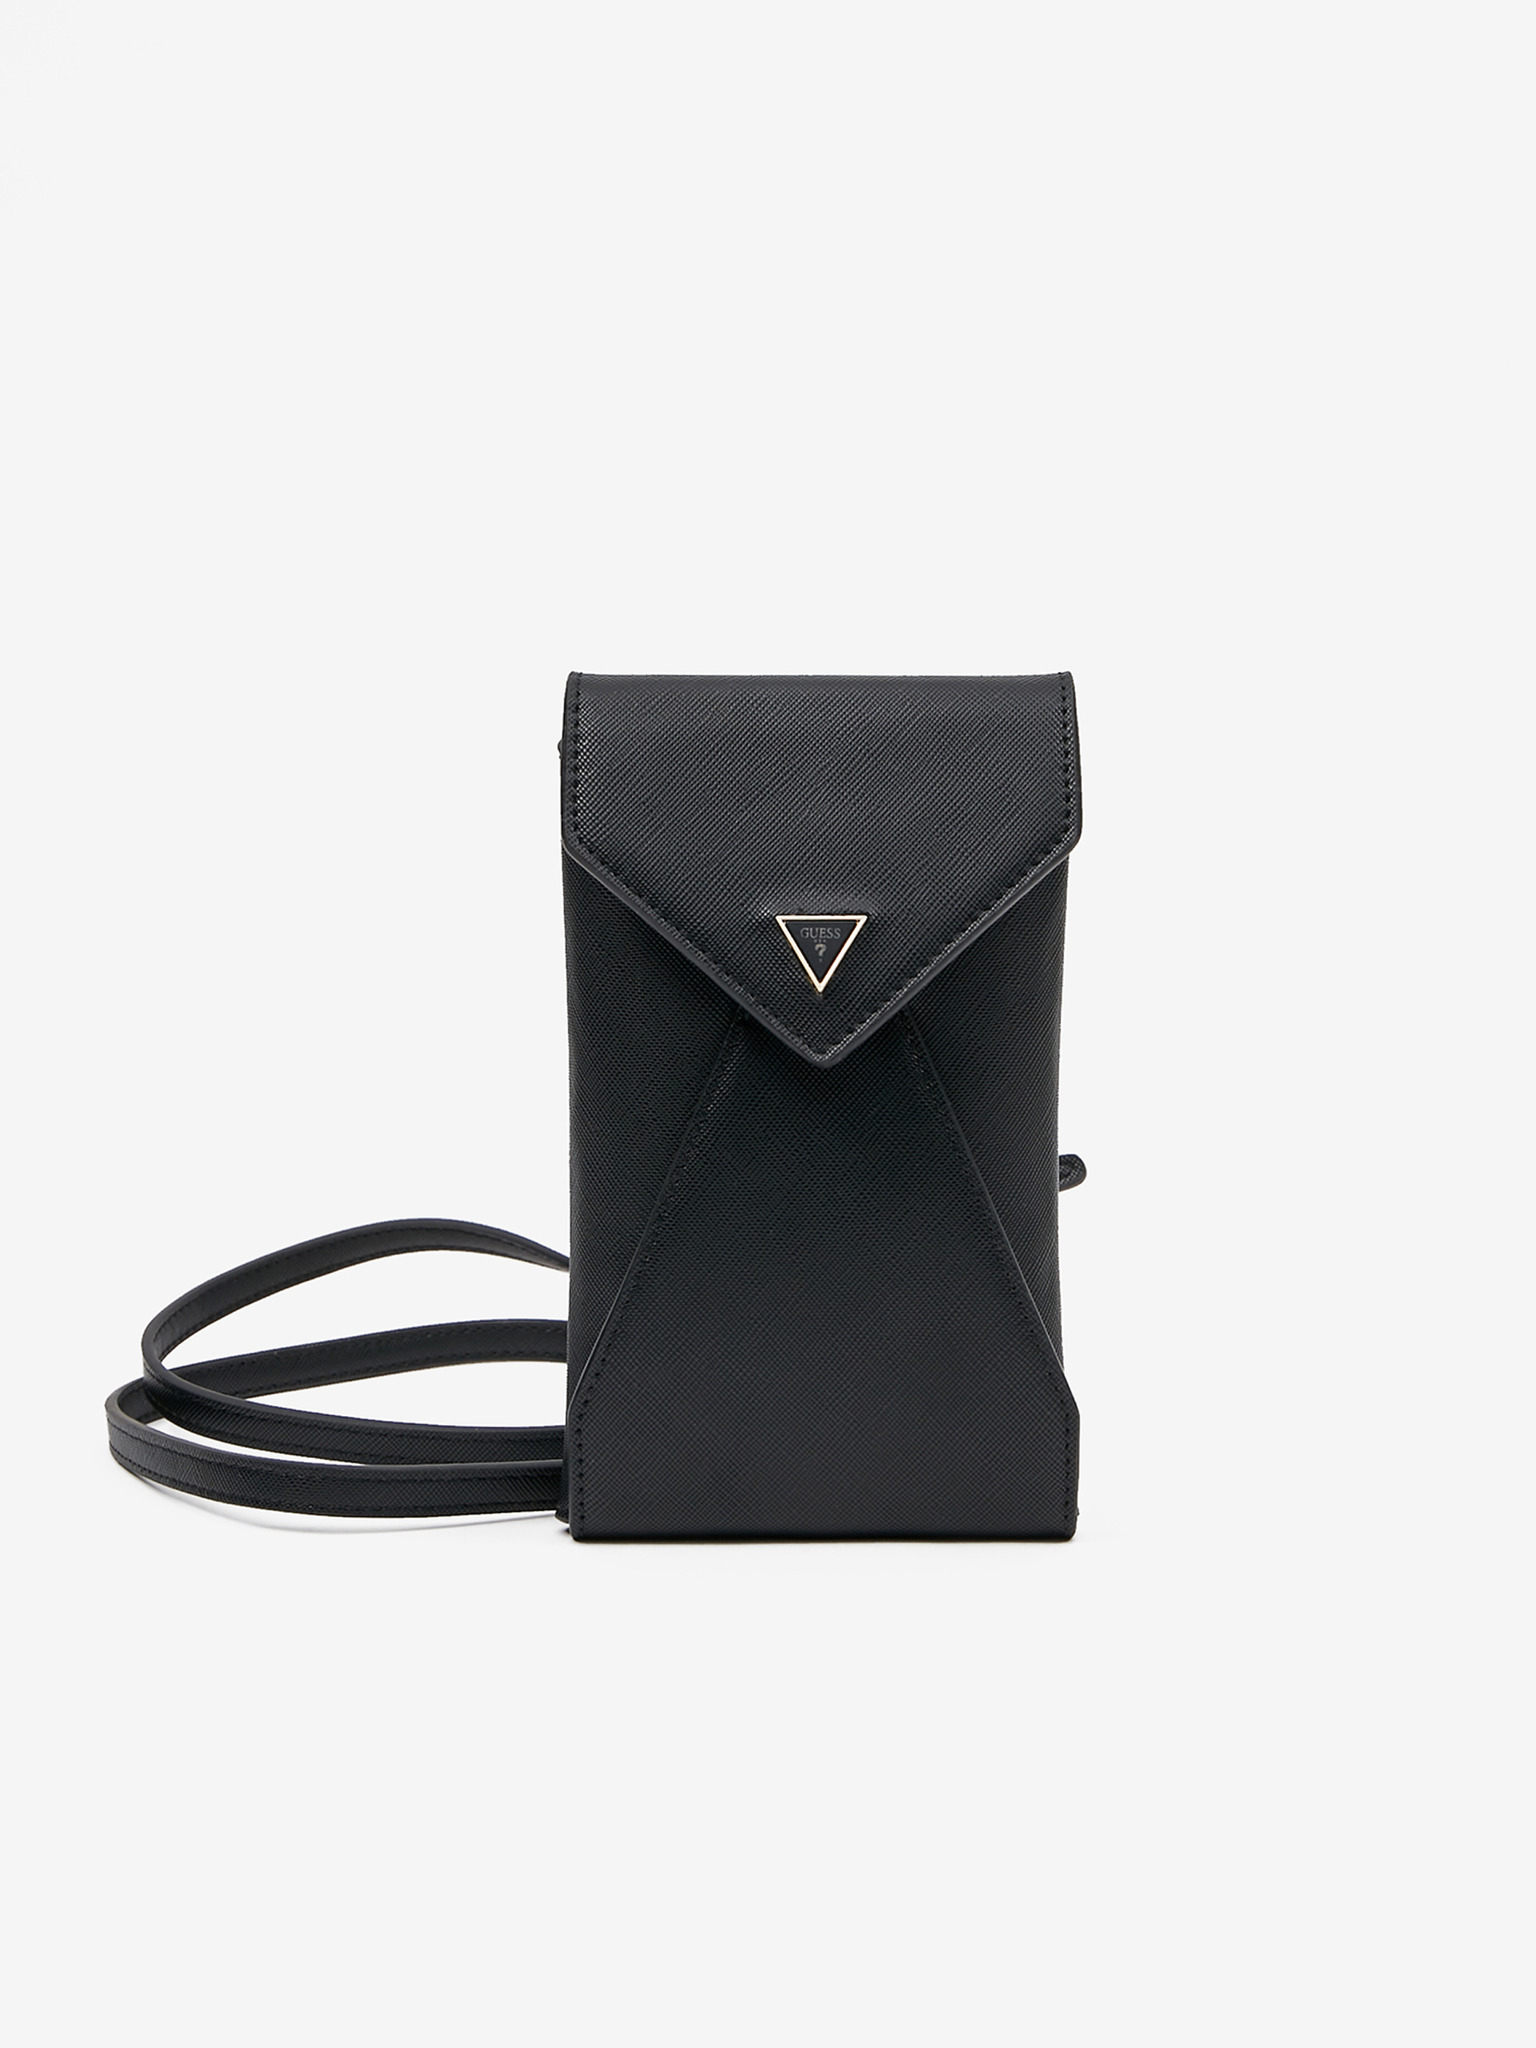 Guess - black cross body purse - good size purse to... - Depop